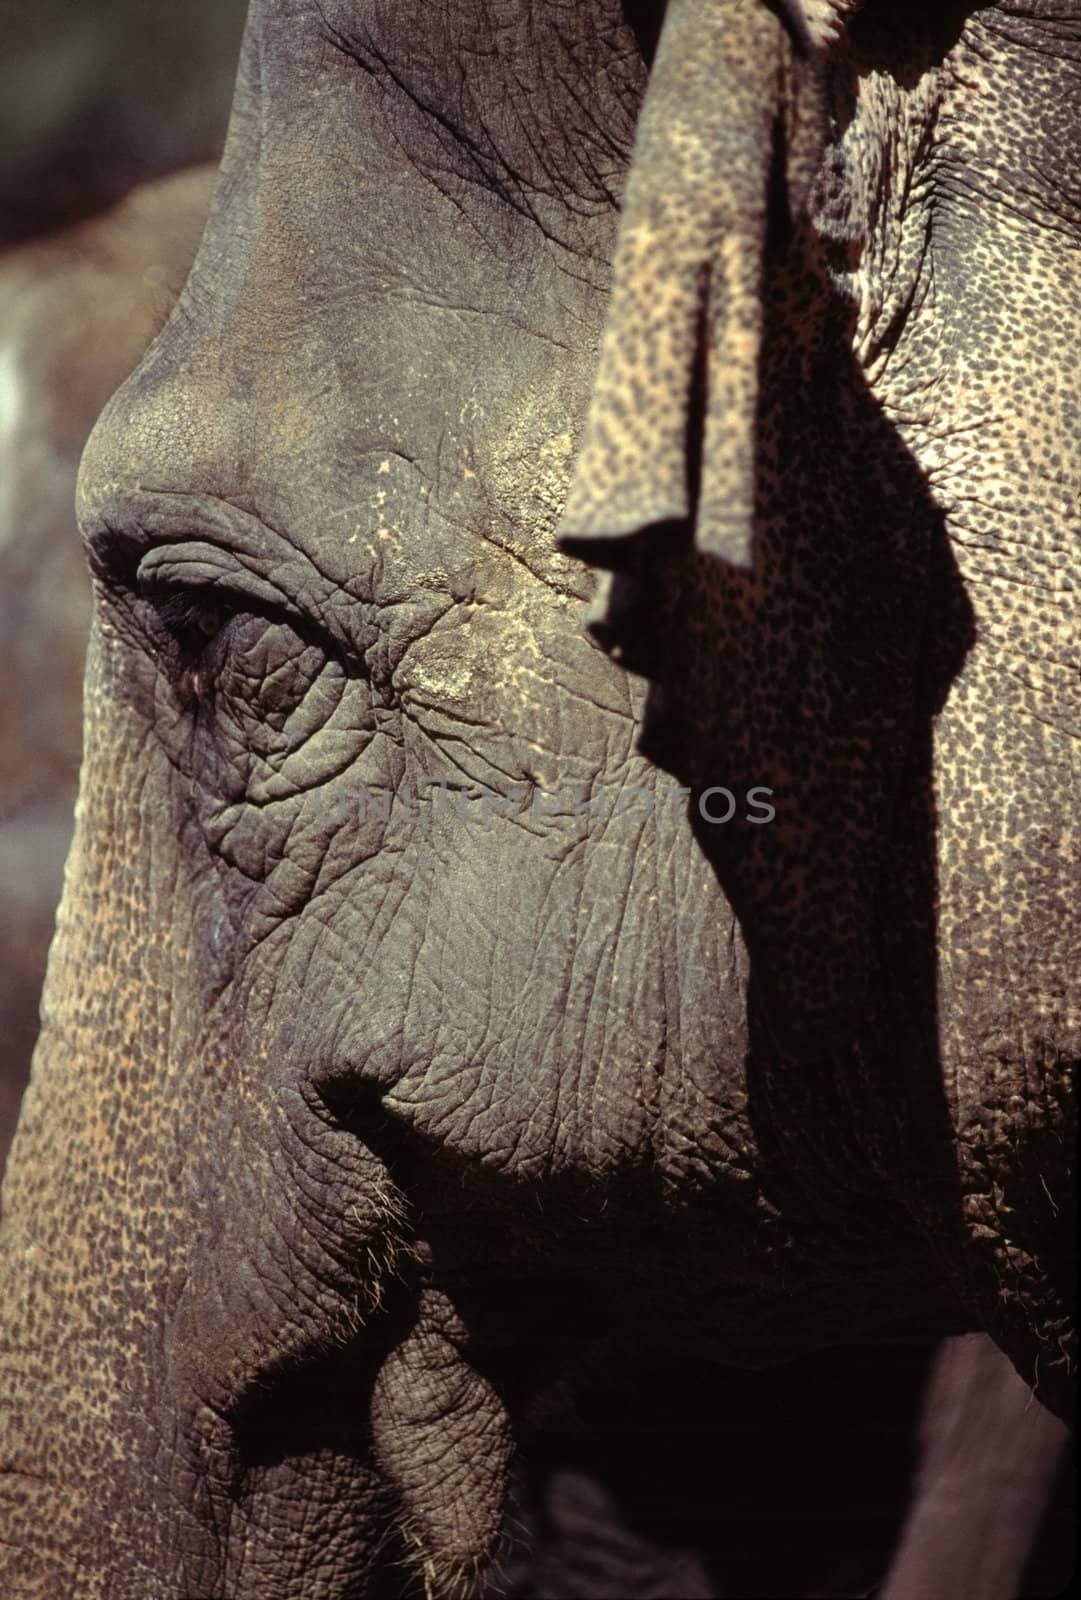 Head shot of elephant